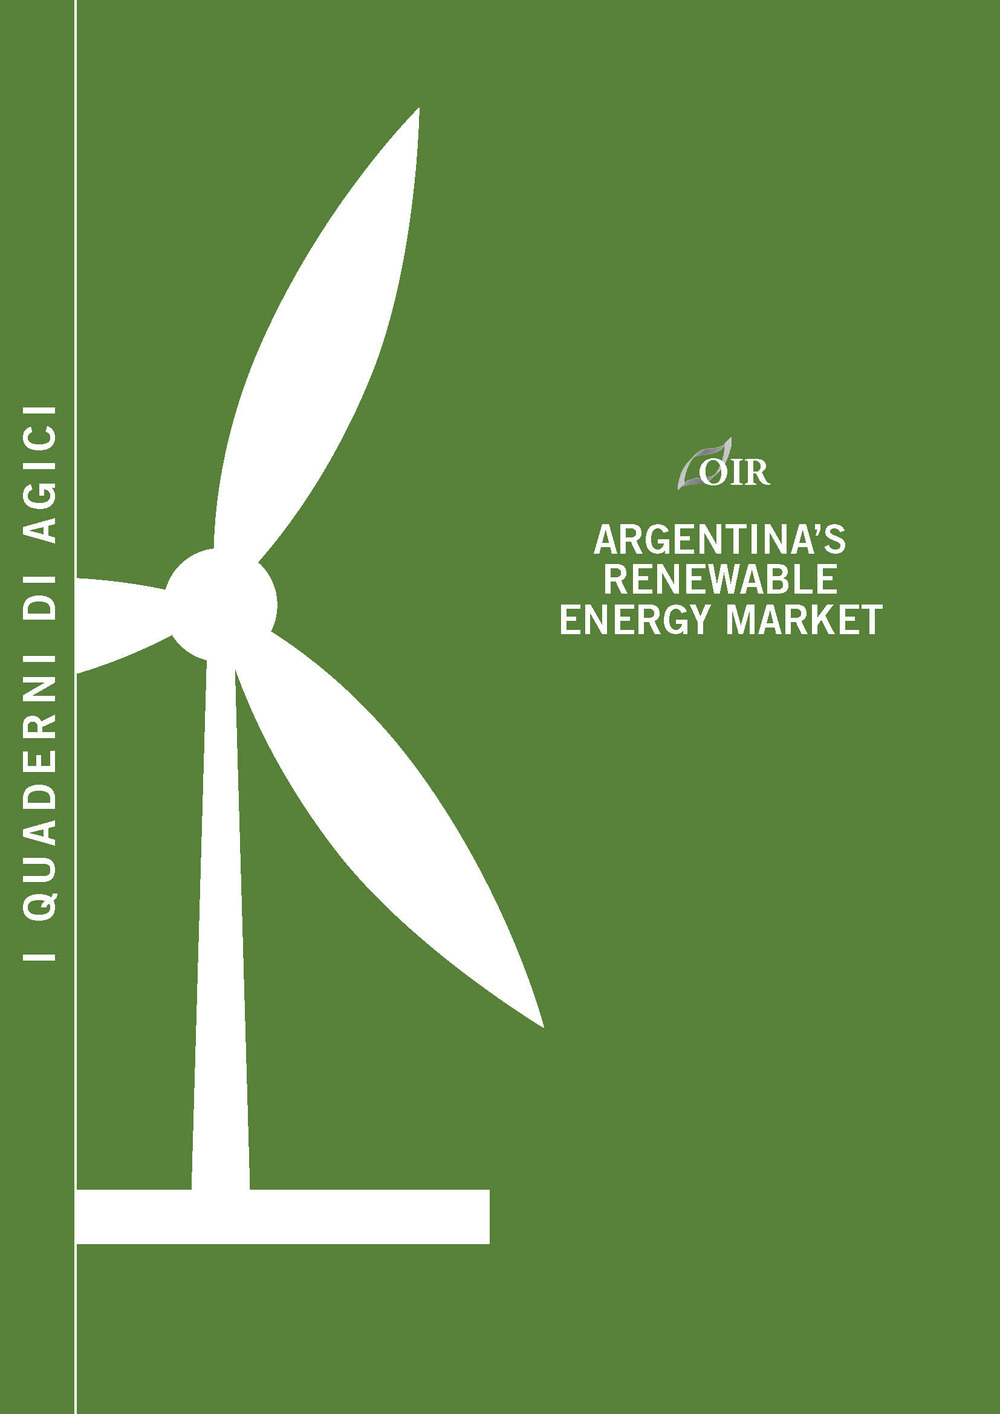 Argentina's renewable energy market